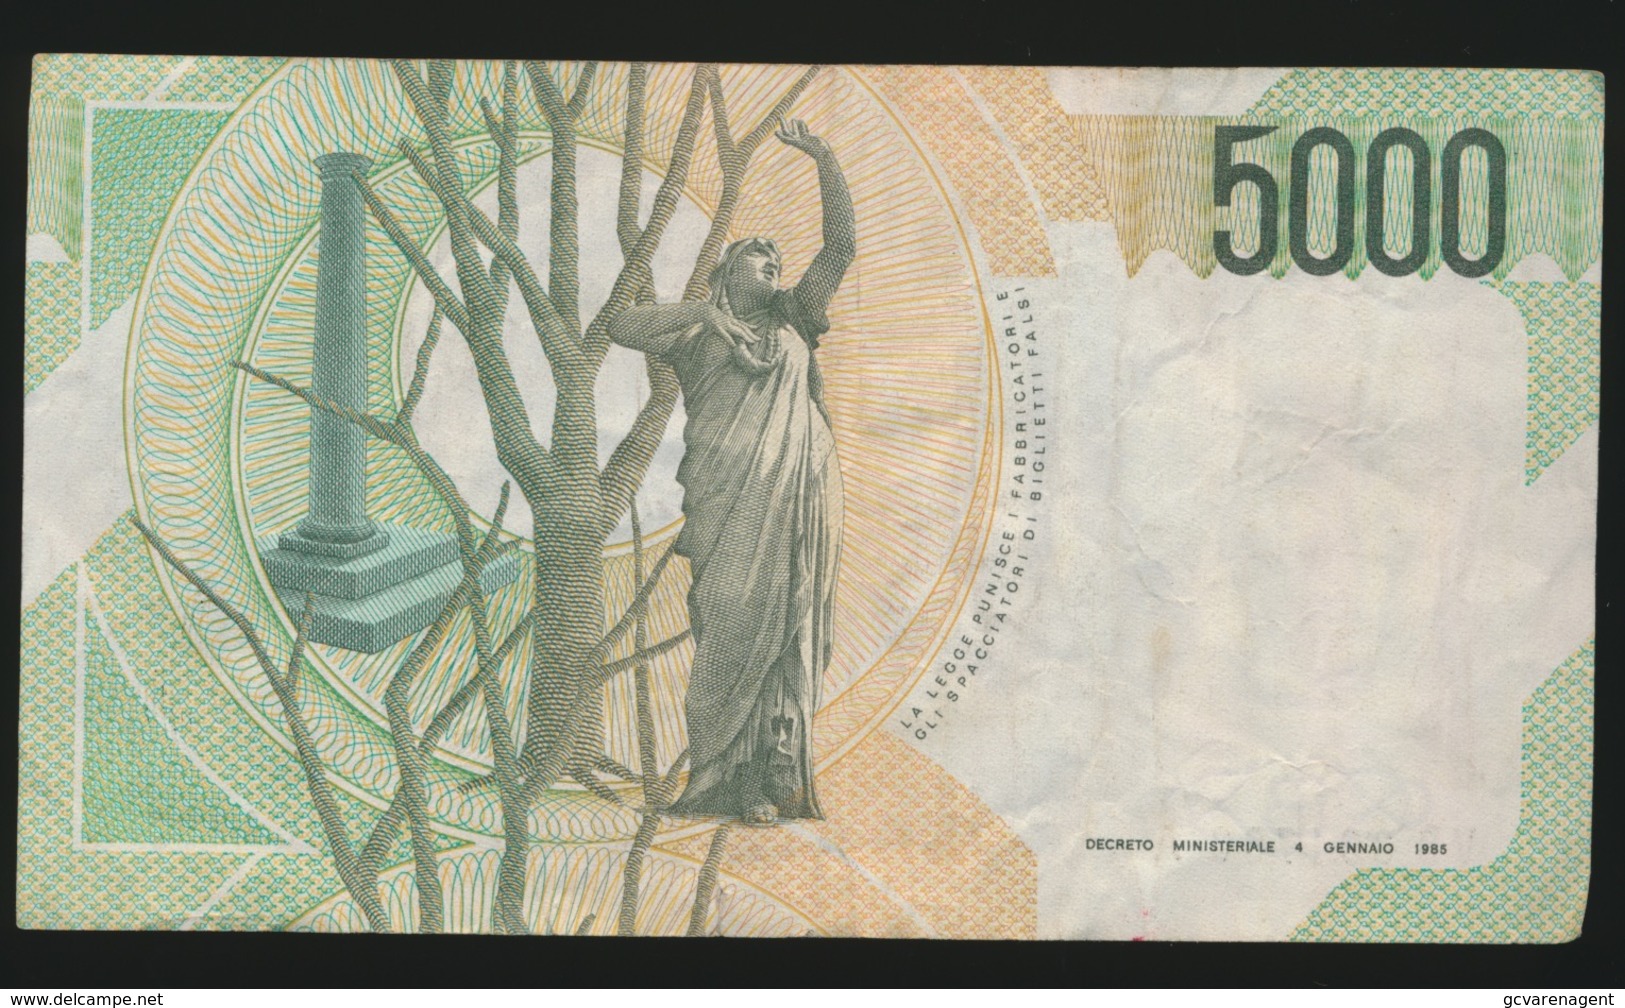 5000 LIRE - 5000 Lire